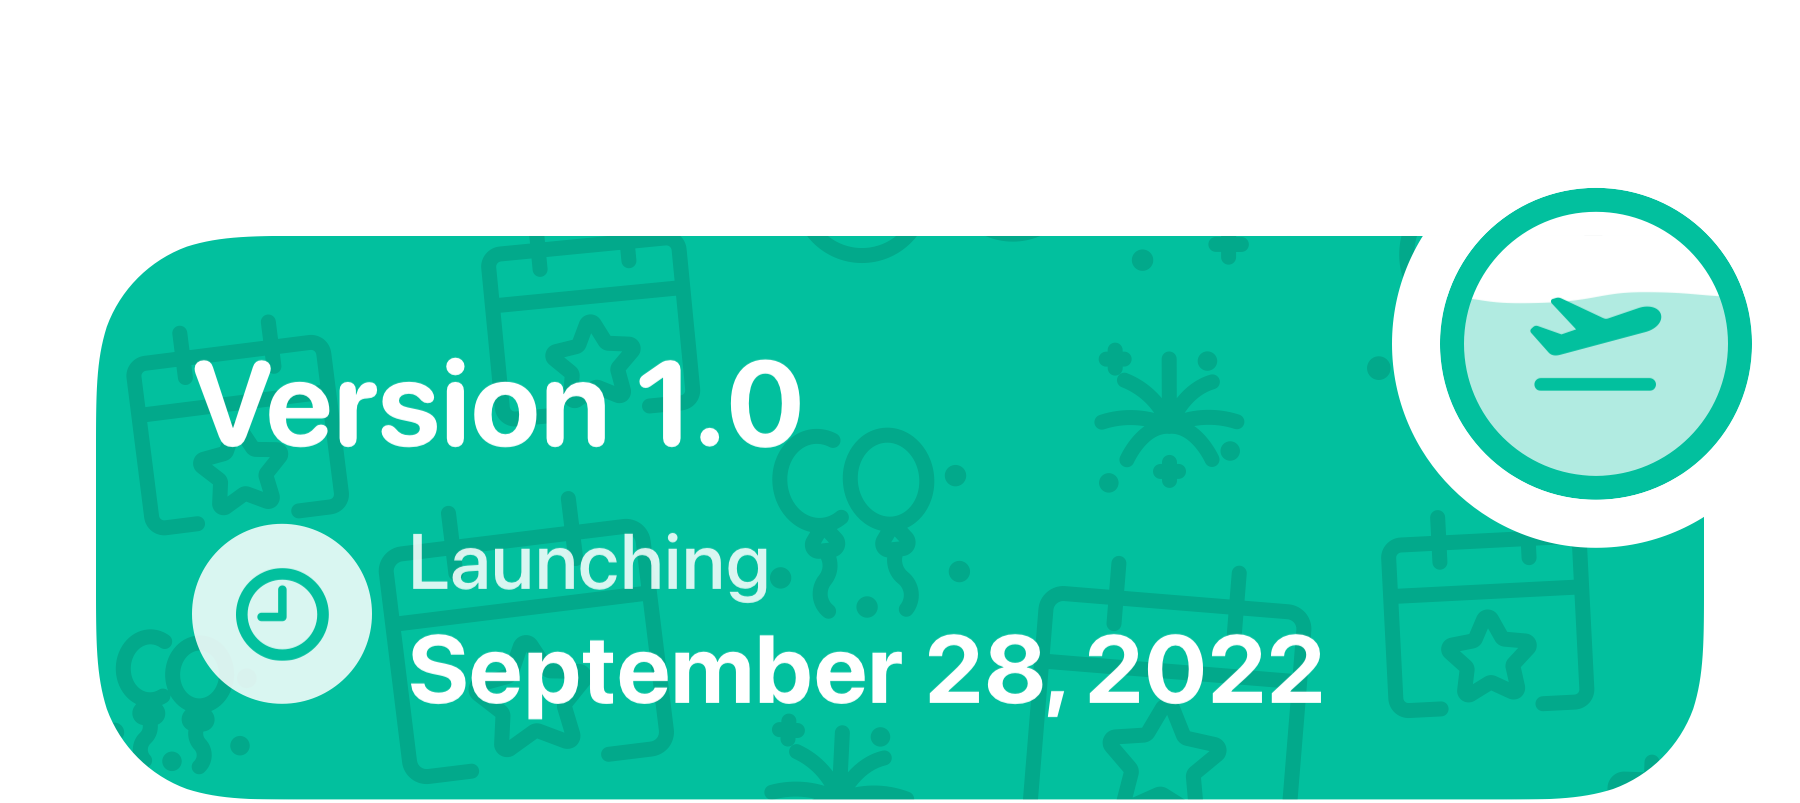 Version 1.0 launching soon